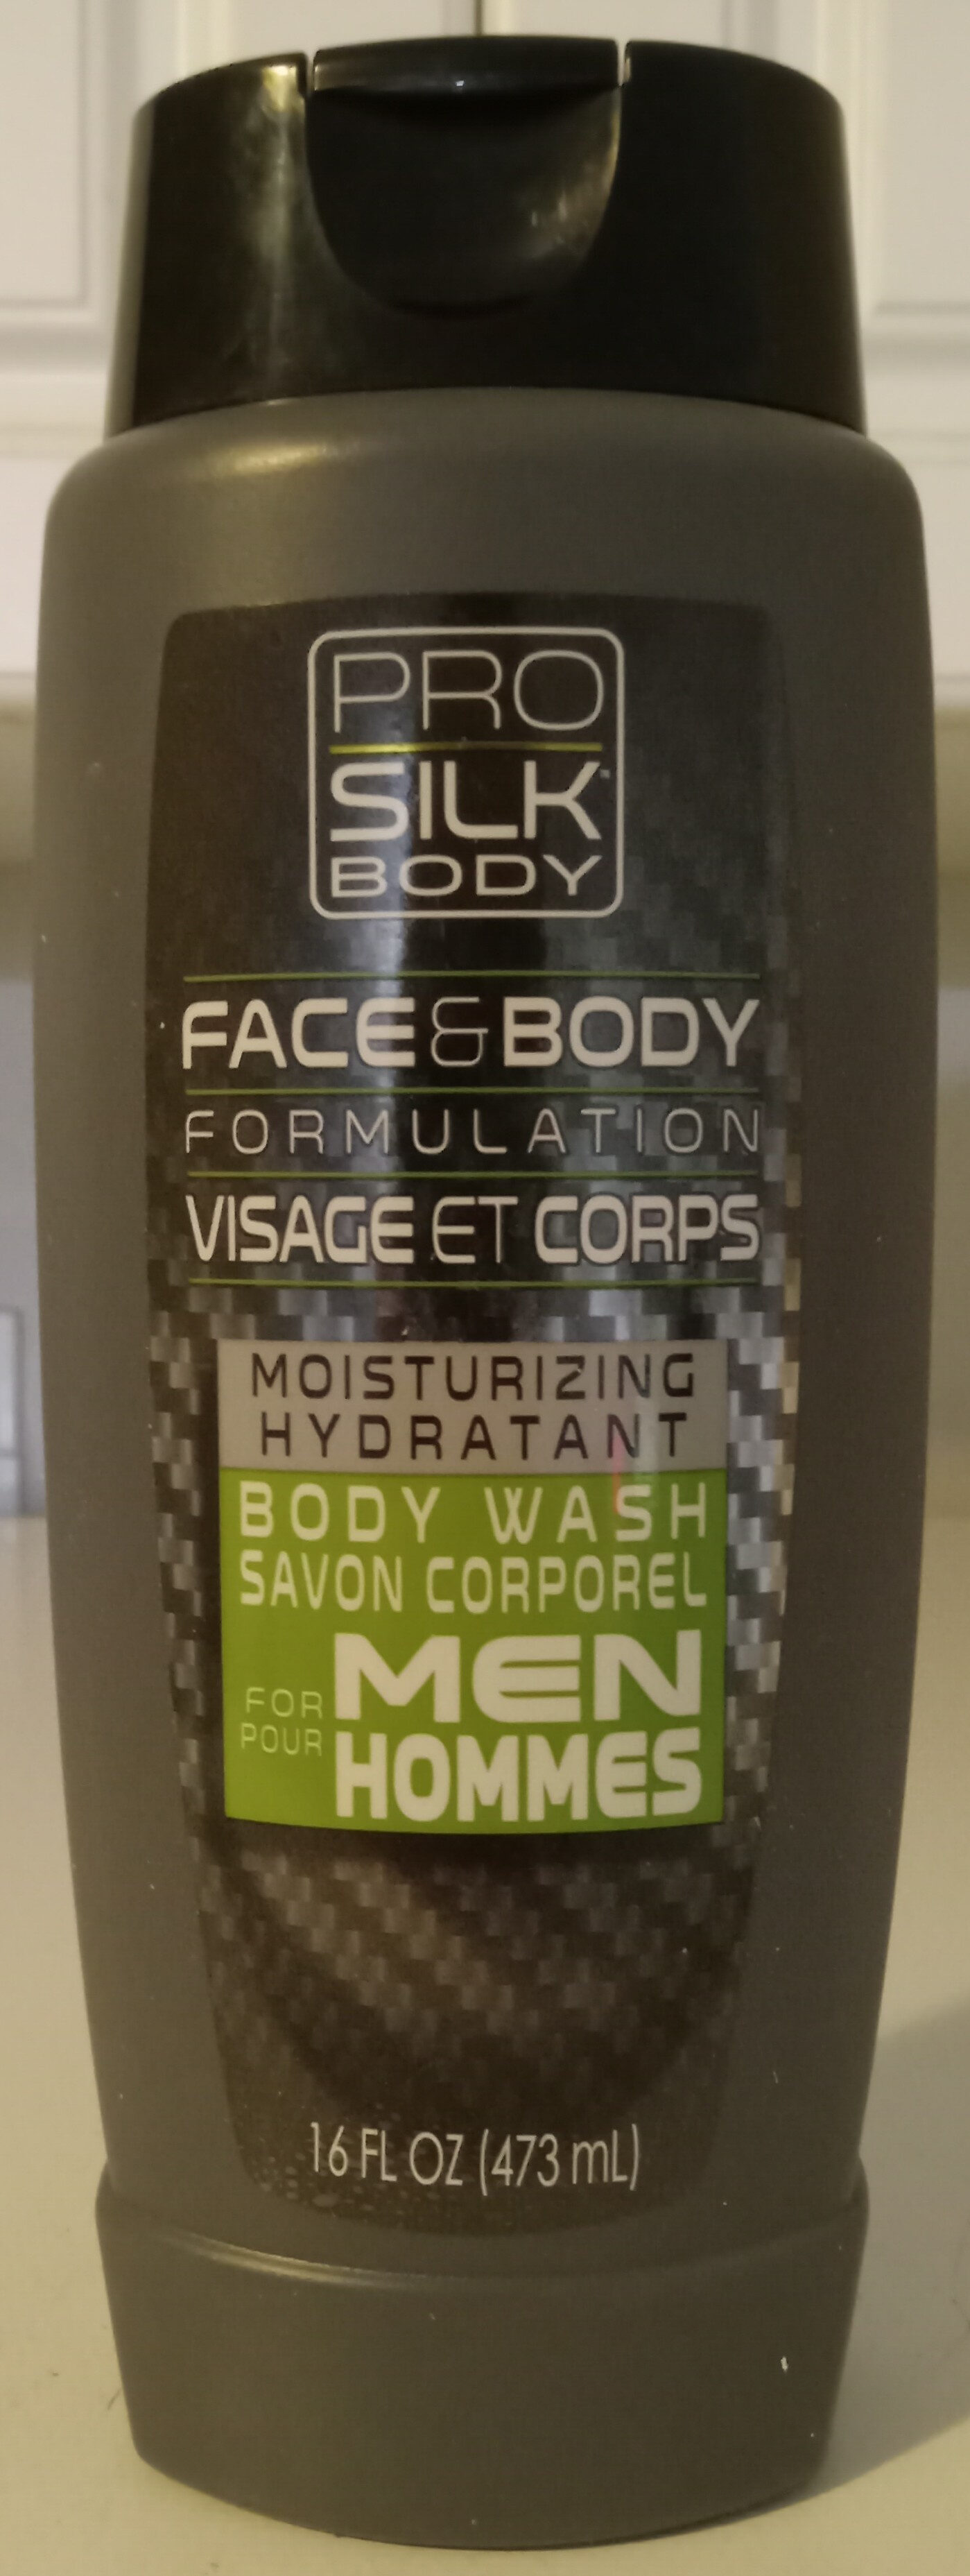 Face & Body Formulation Moisturizing Body Wash for Men - Produto - en